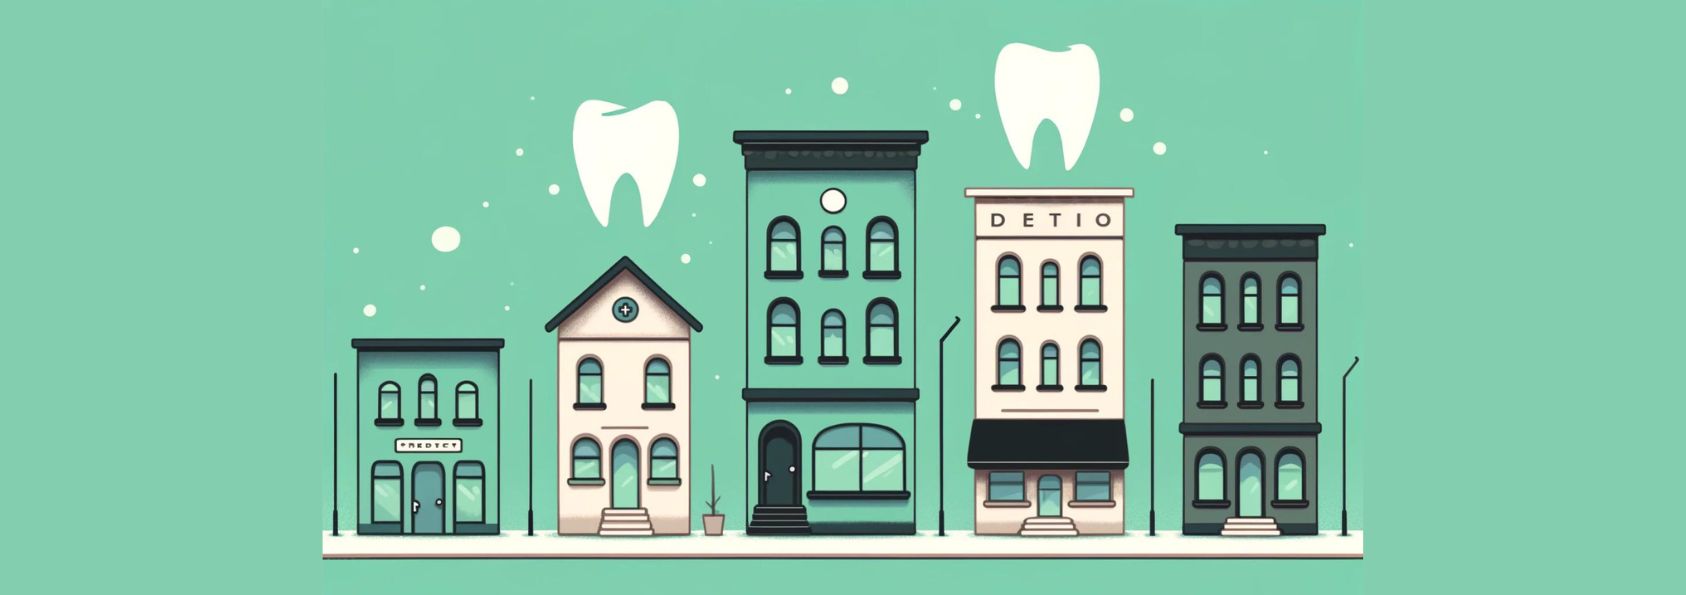 5 Free Ways to Grow a Dental Practice